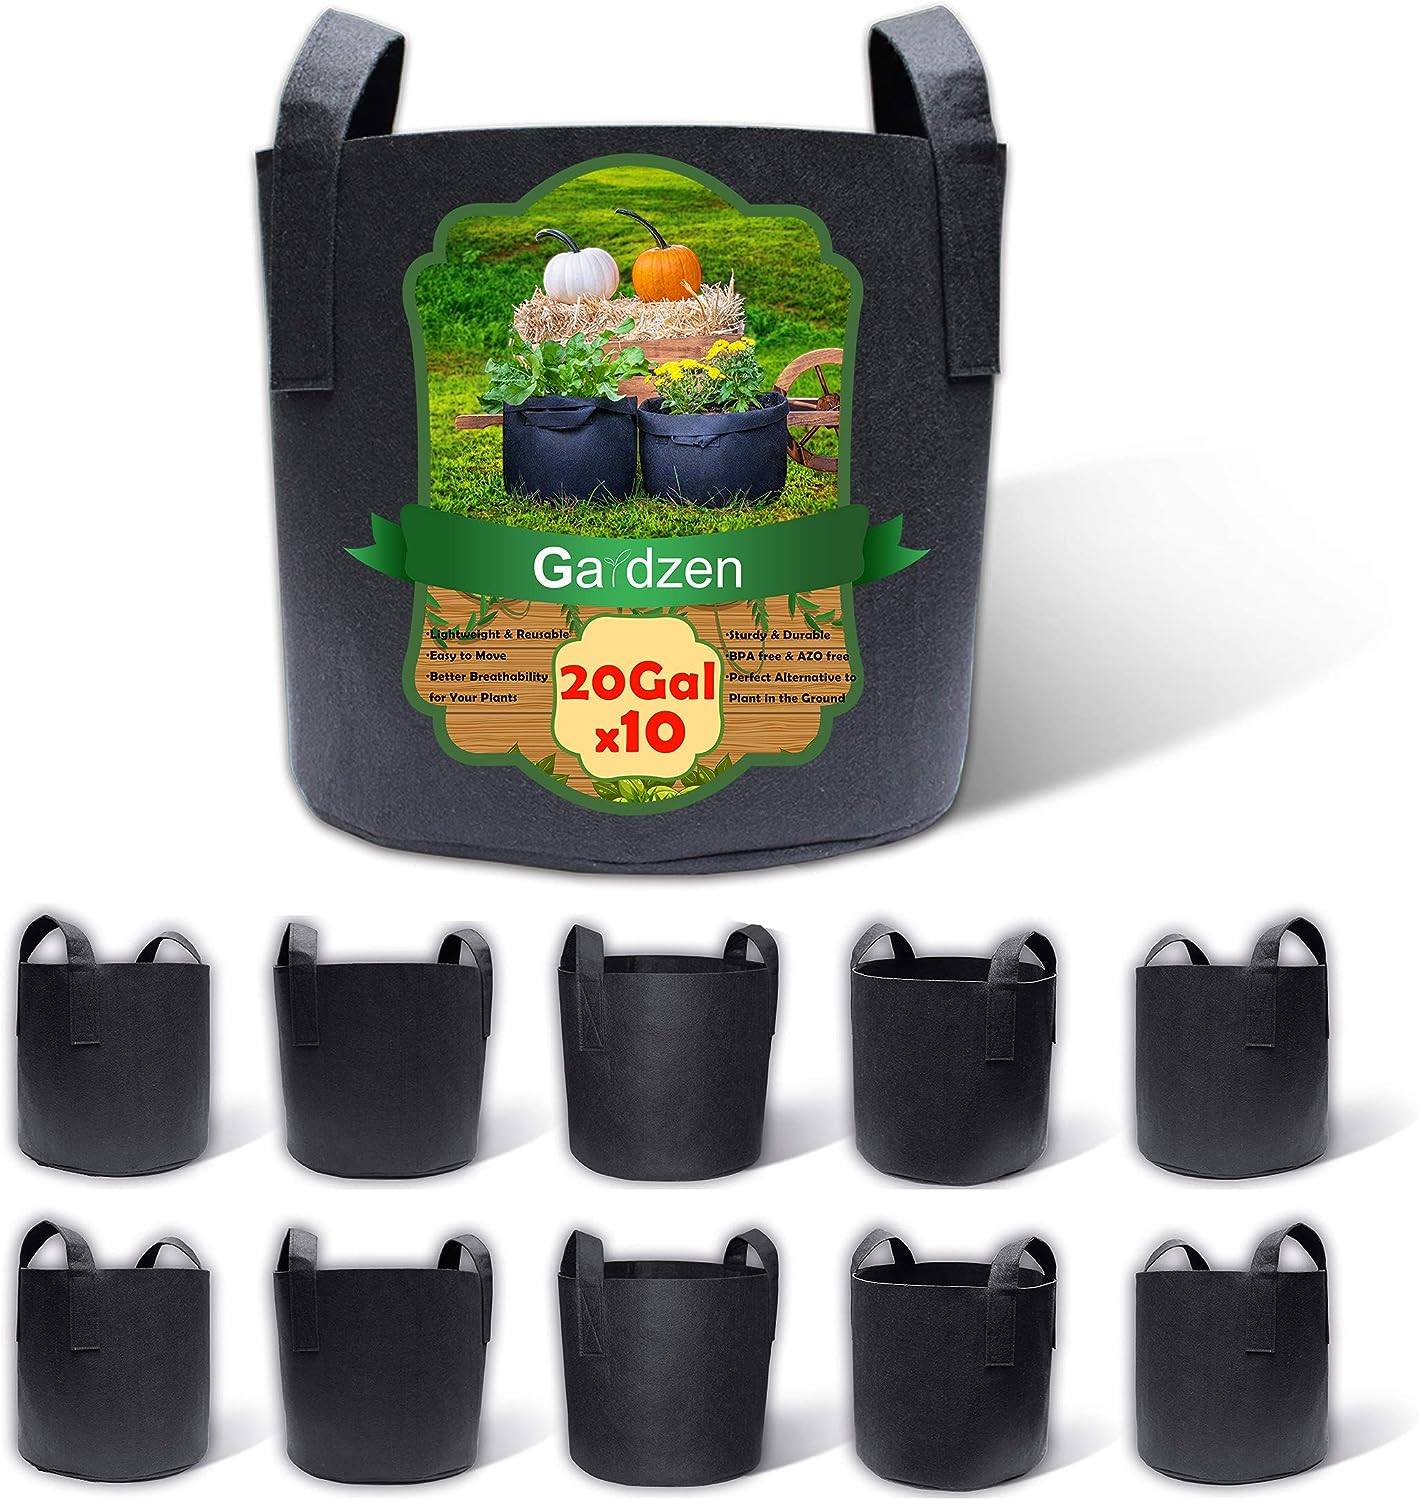 Gardzen 10-Pack 20 Gallon Grow Bags, Aeration Fabric Pots with Handles